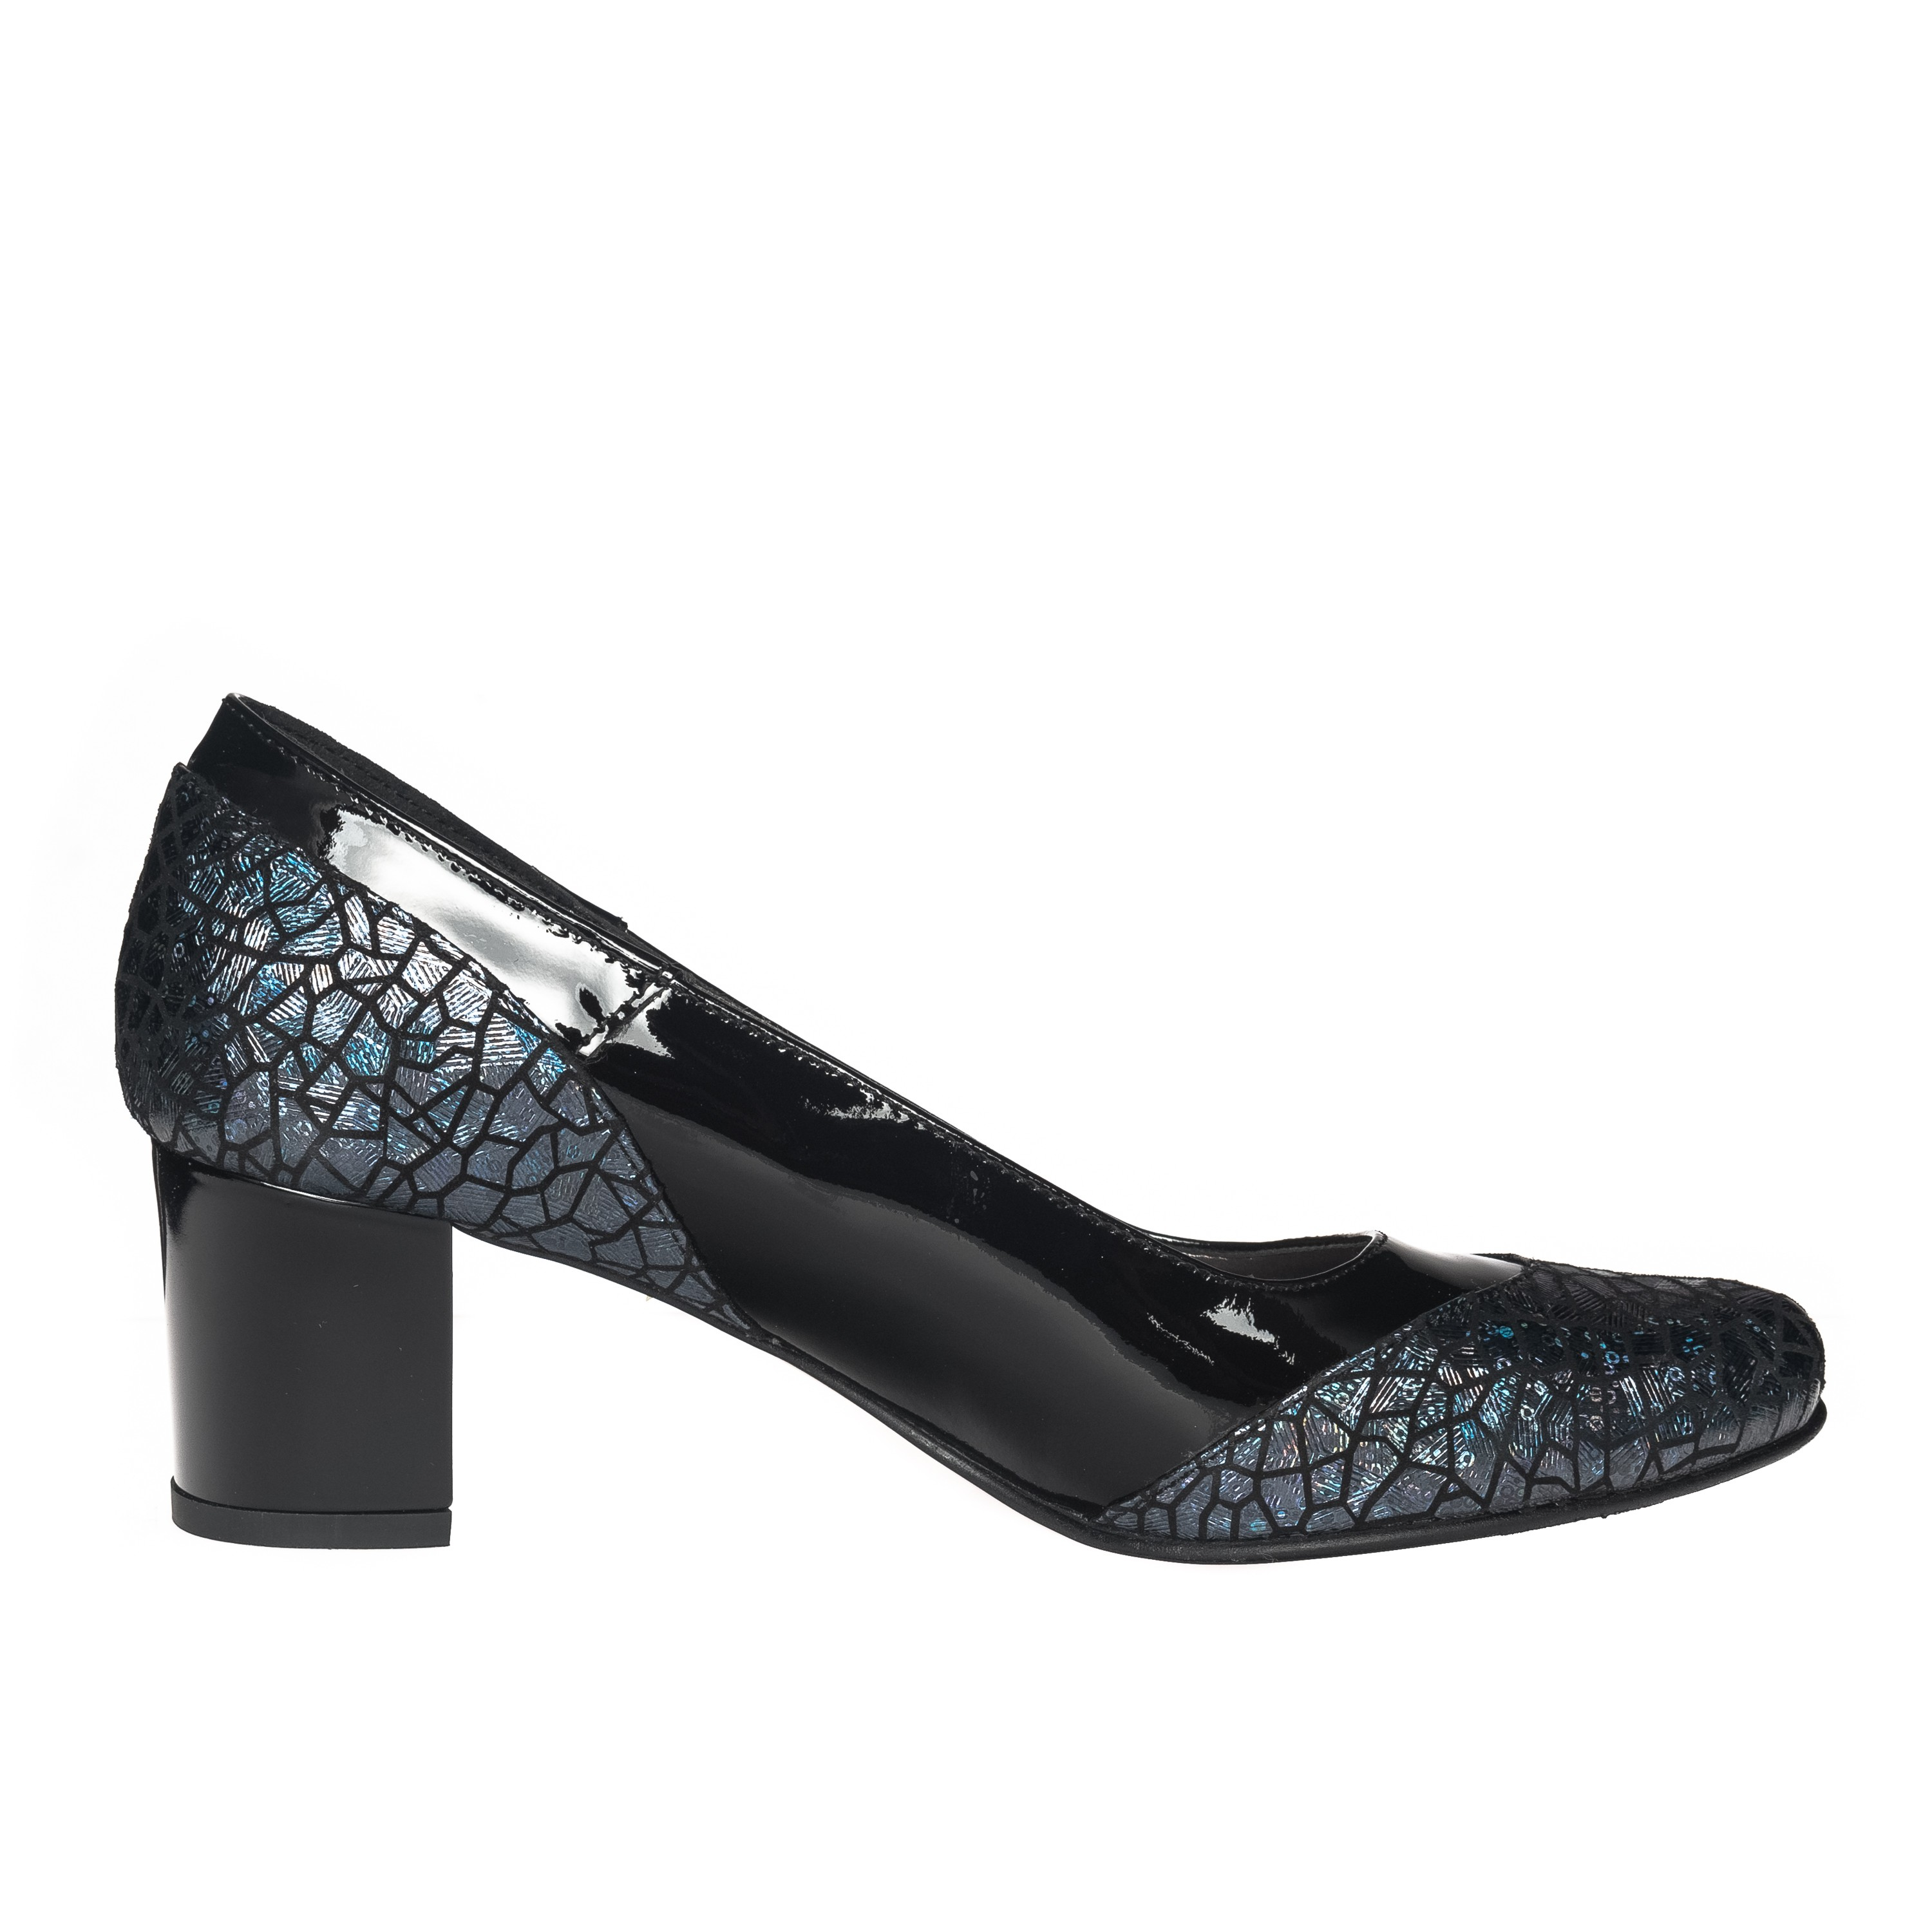 Pantofi dama din piele naturala - Negru lac cu imprimeu albastru - 504 NLIA